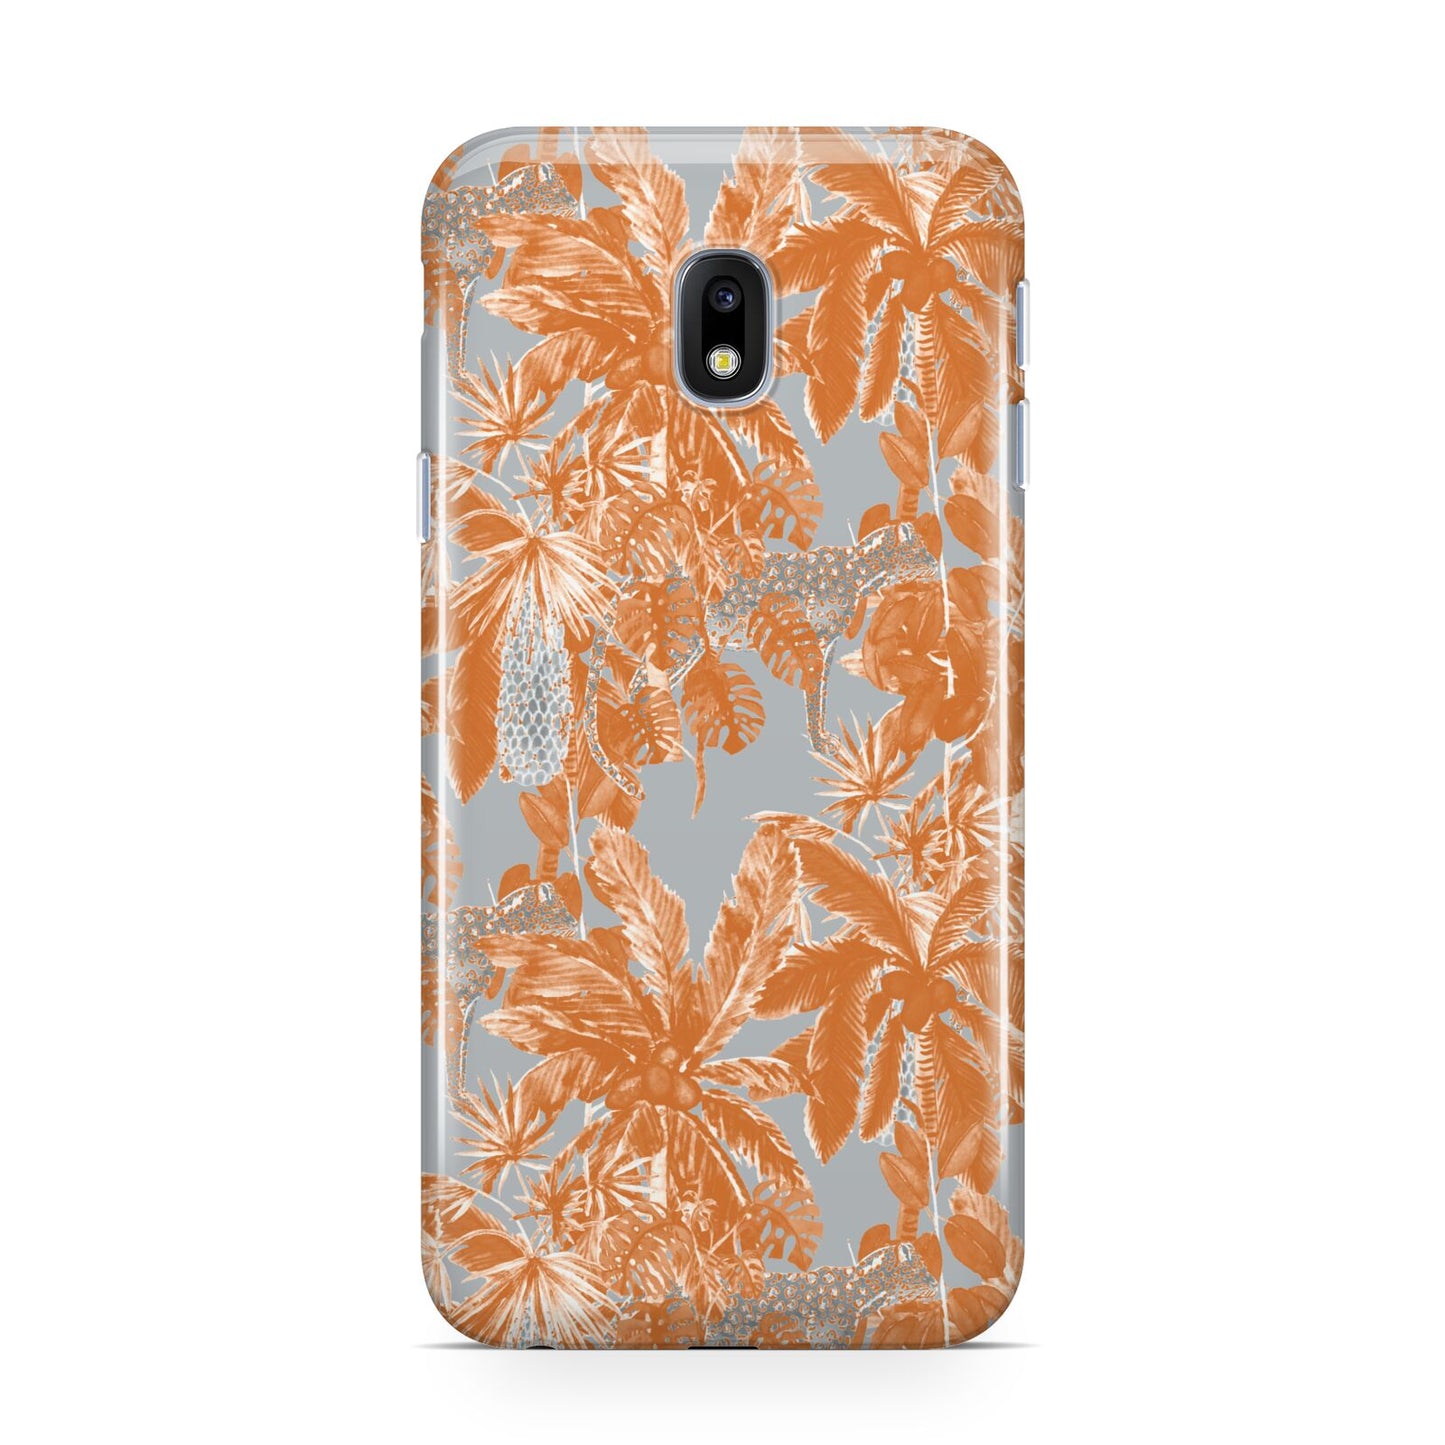 Tropical Samsung Galaxy J3 2017 Case